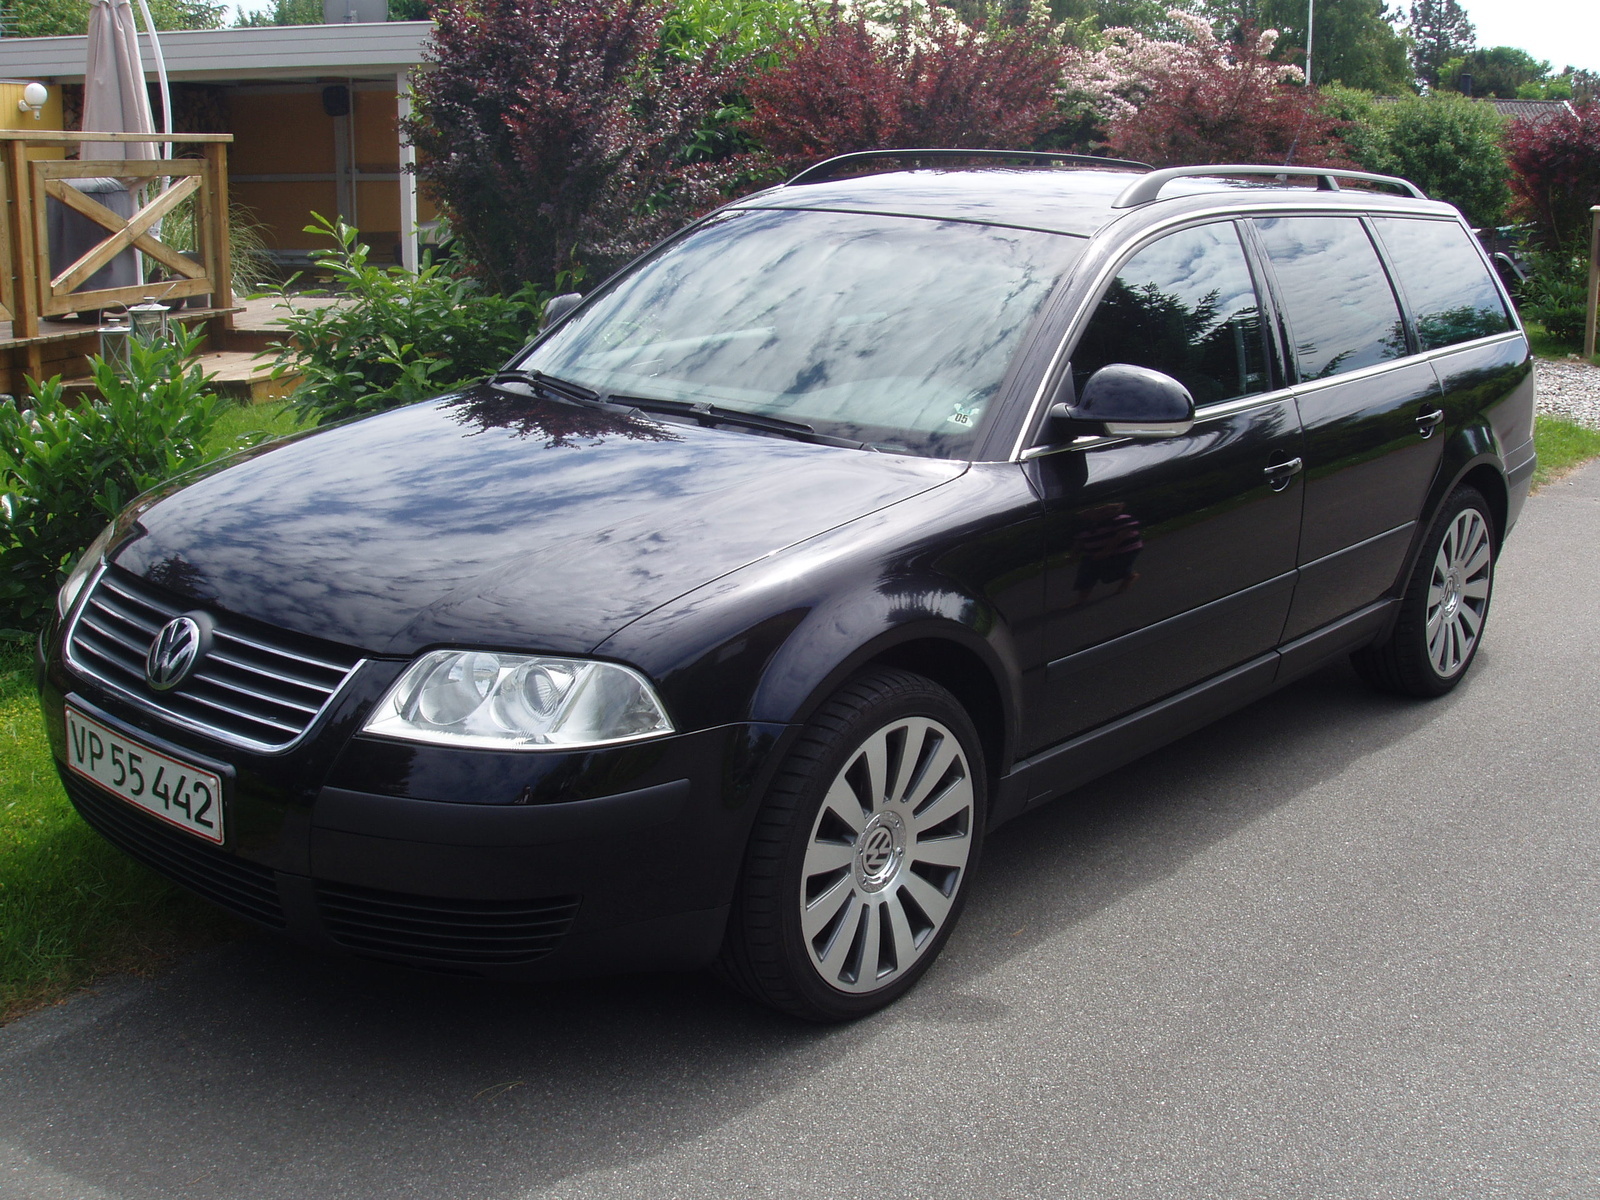 2004 Volkswagen Passat: Prices, Reviews & Pictures - CarGurus